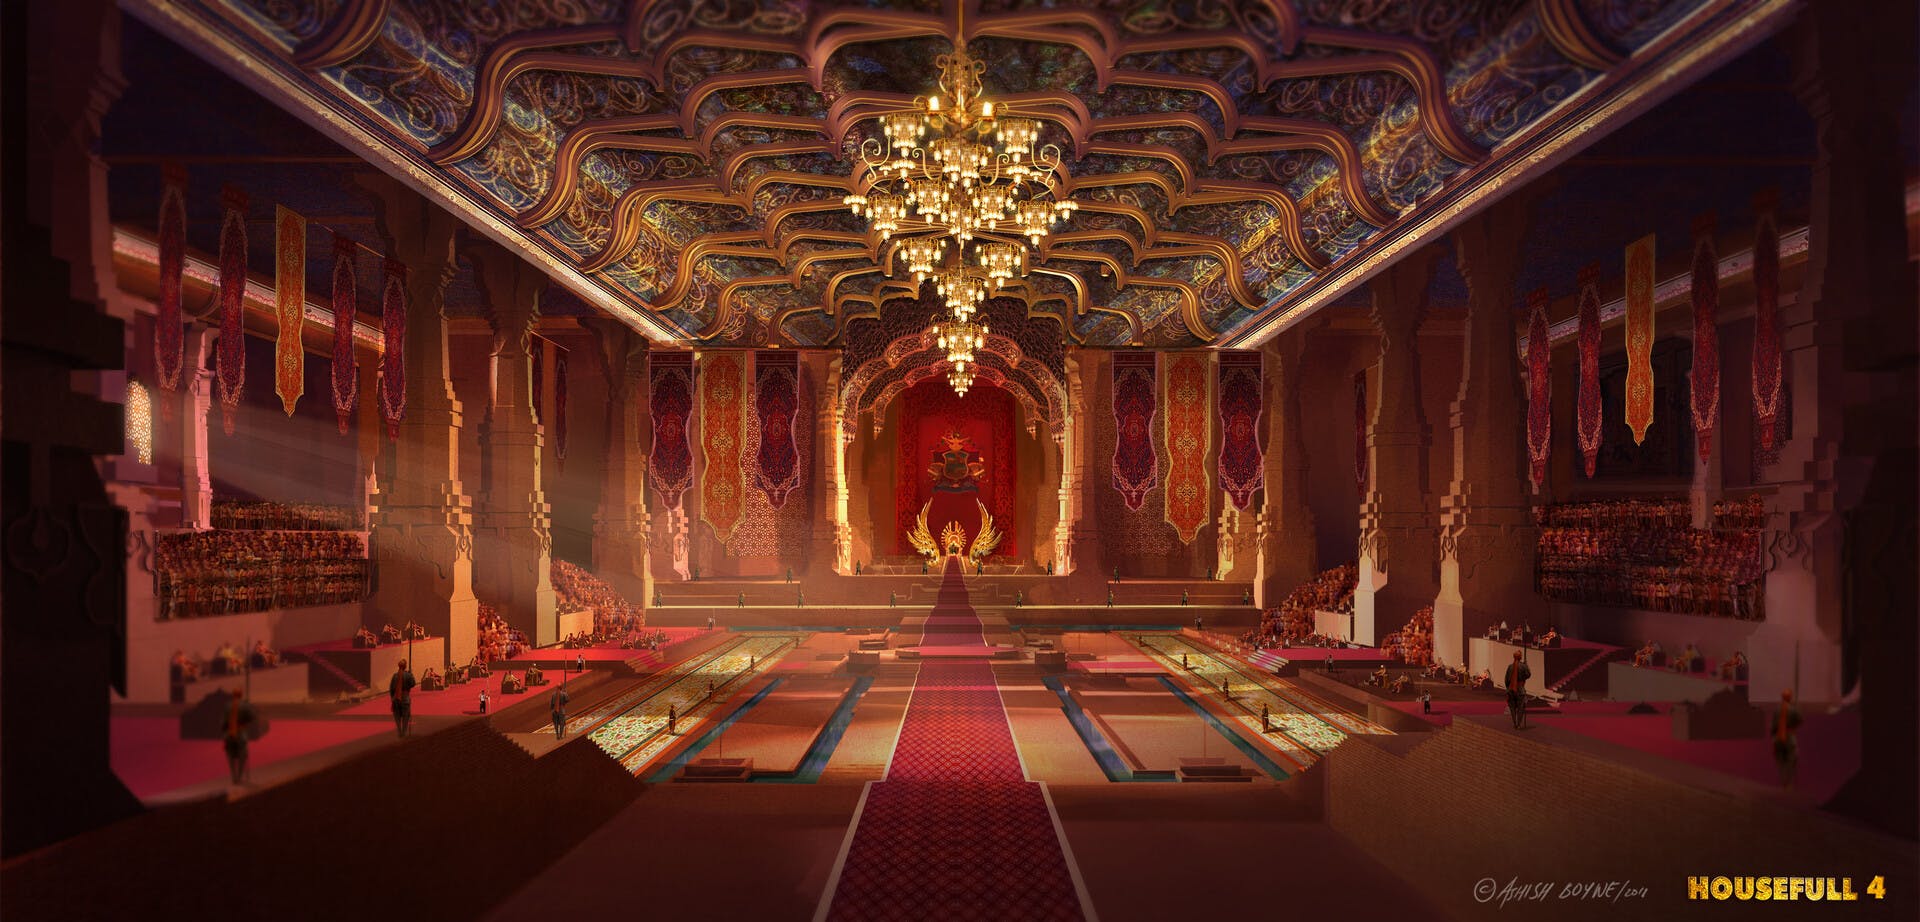 A palace interior